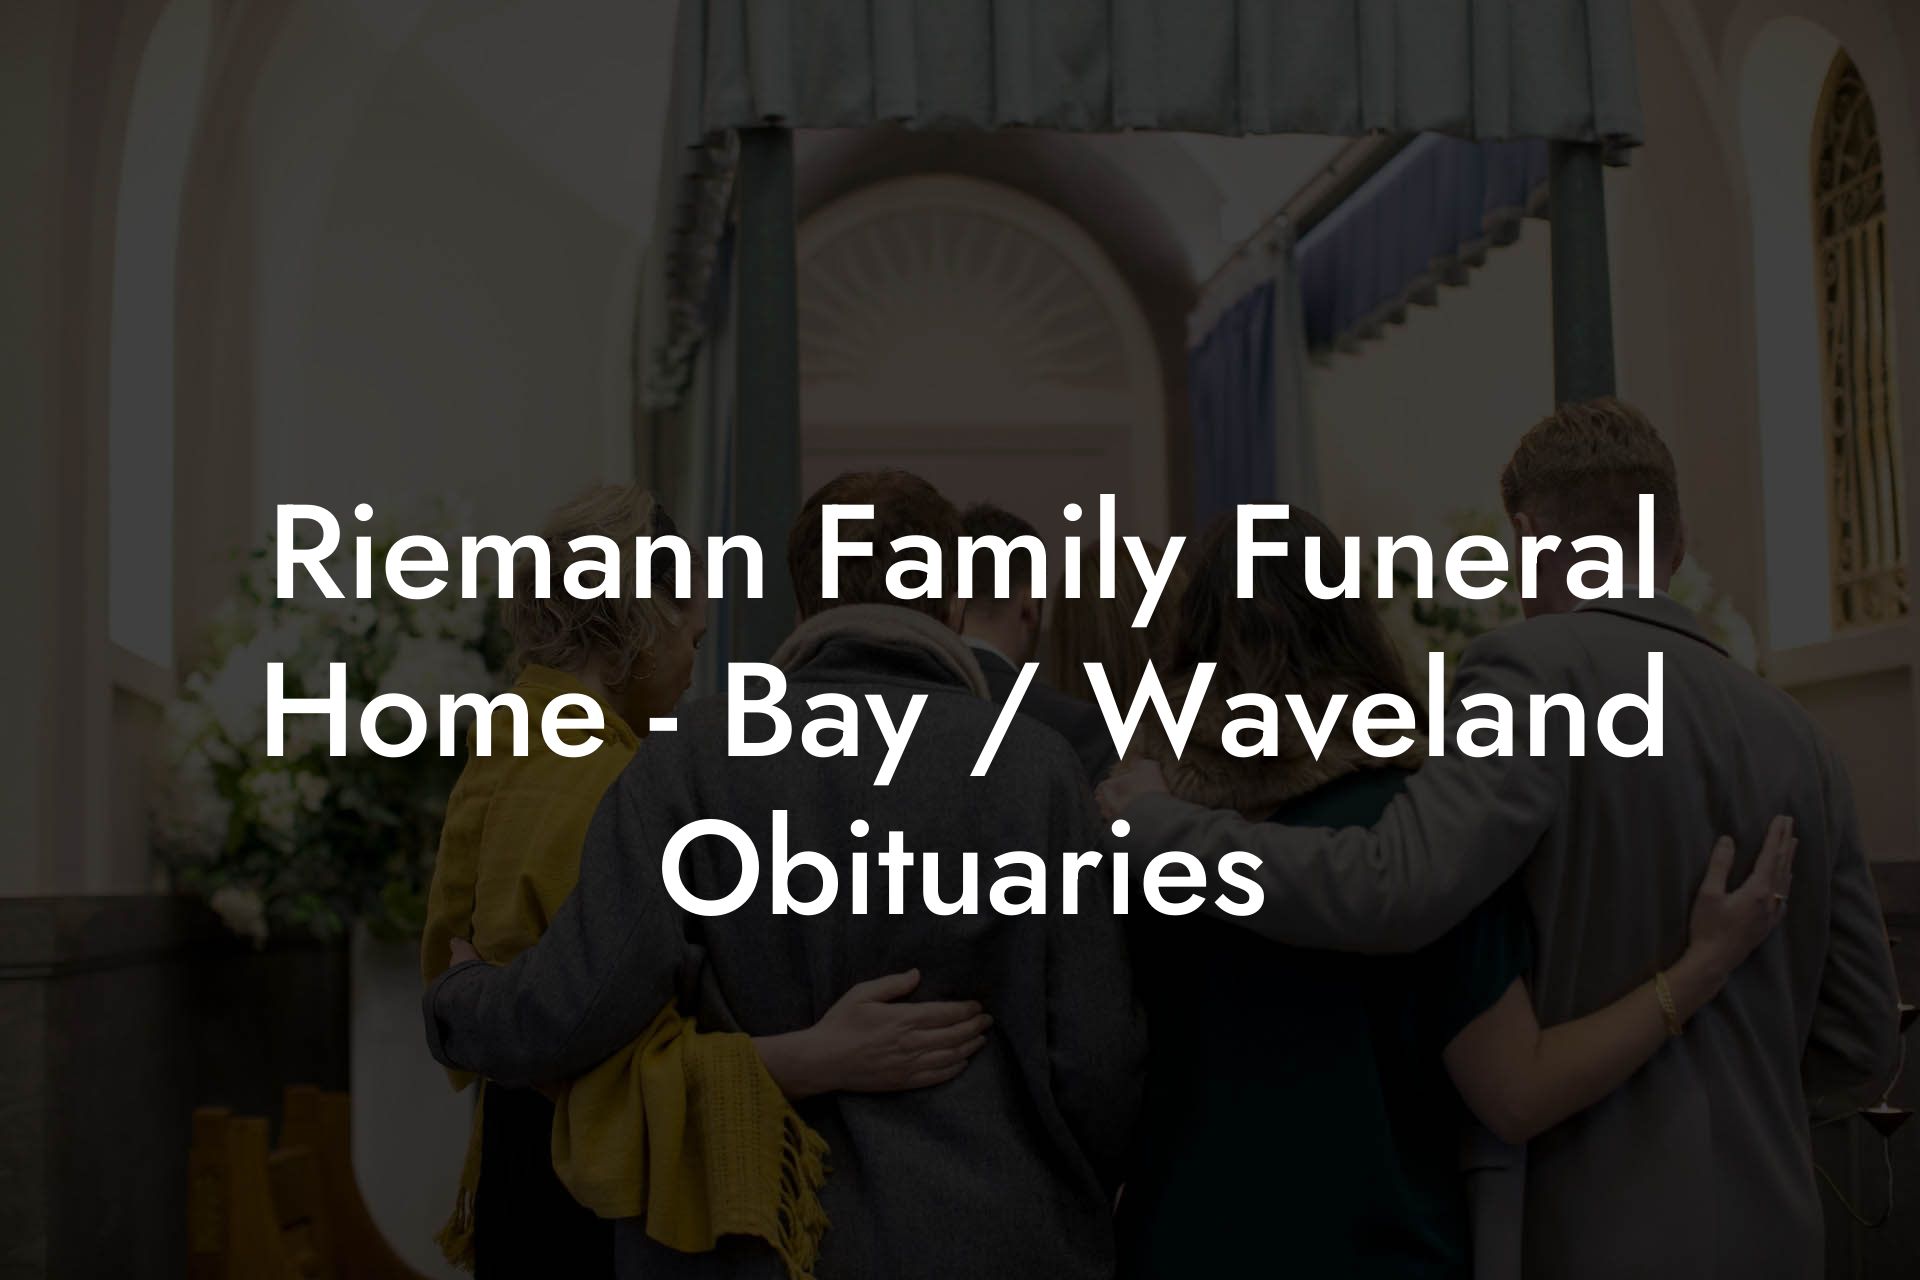 Riemann Family Funeral Home - Bay / Waveland Obituaries